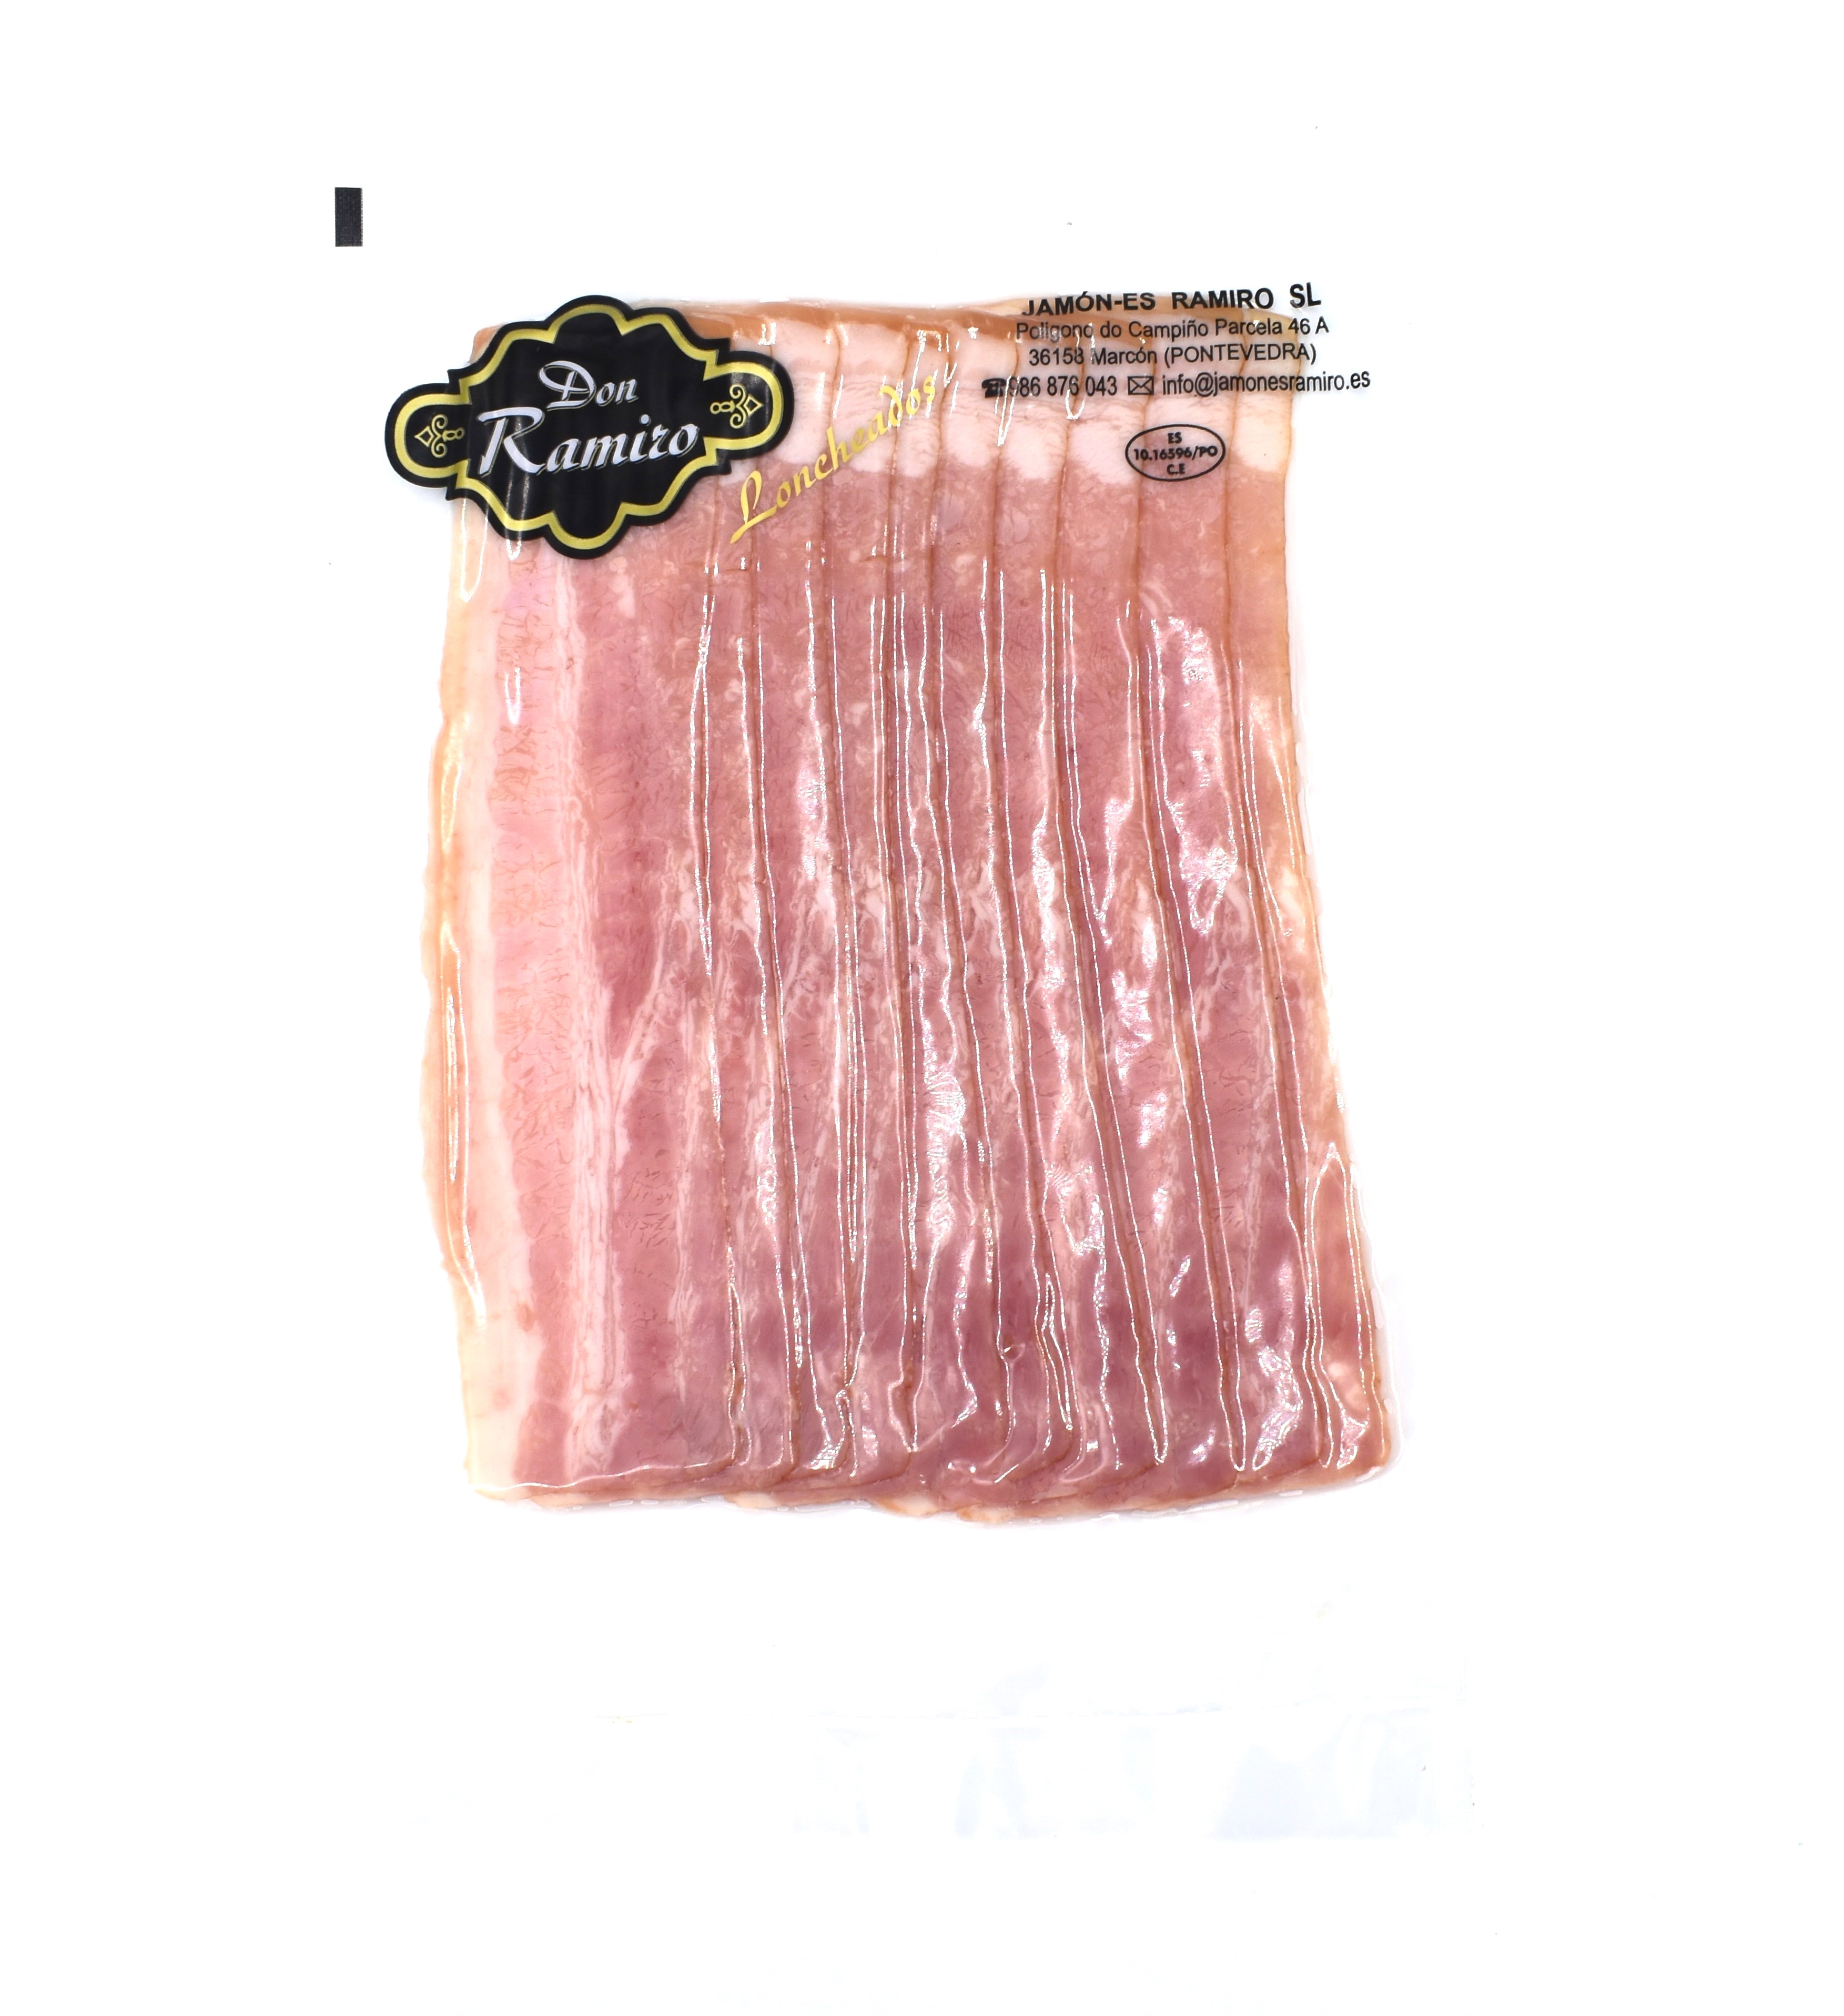 Loncheado de bacon 150 gr.